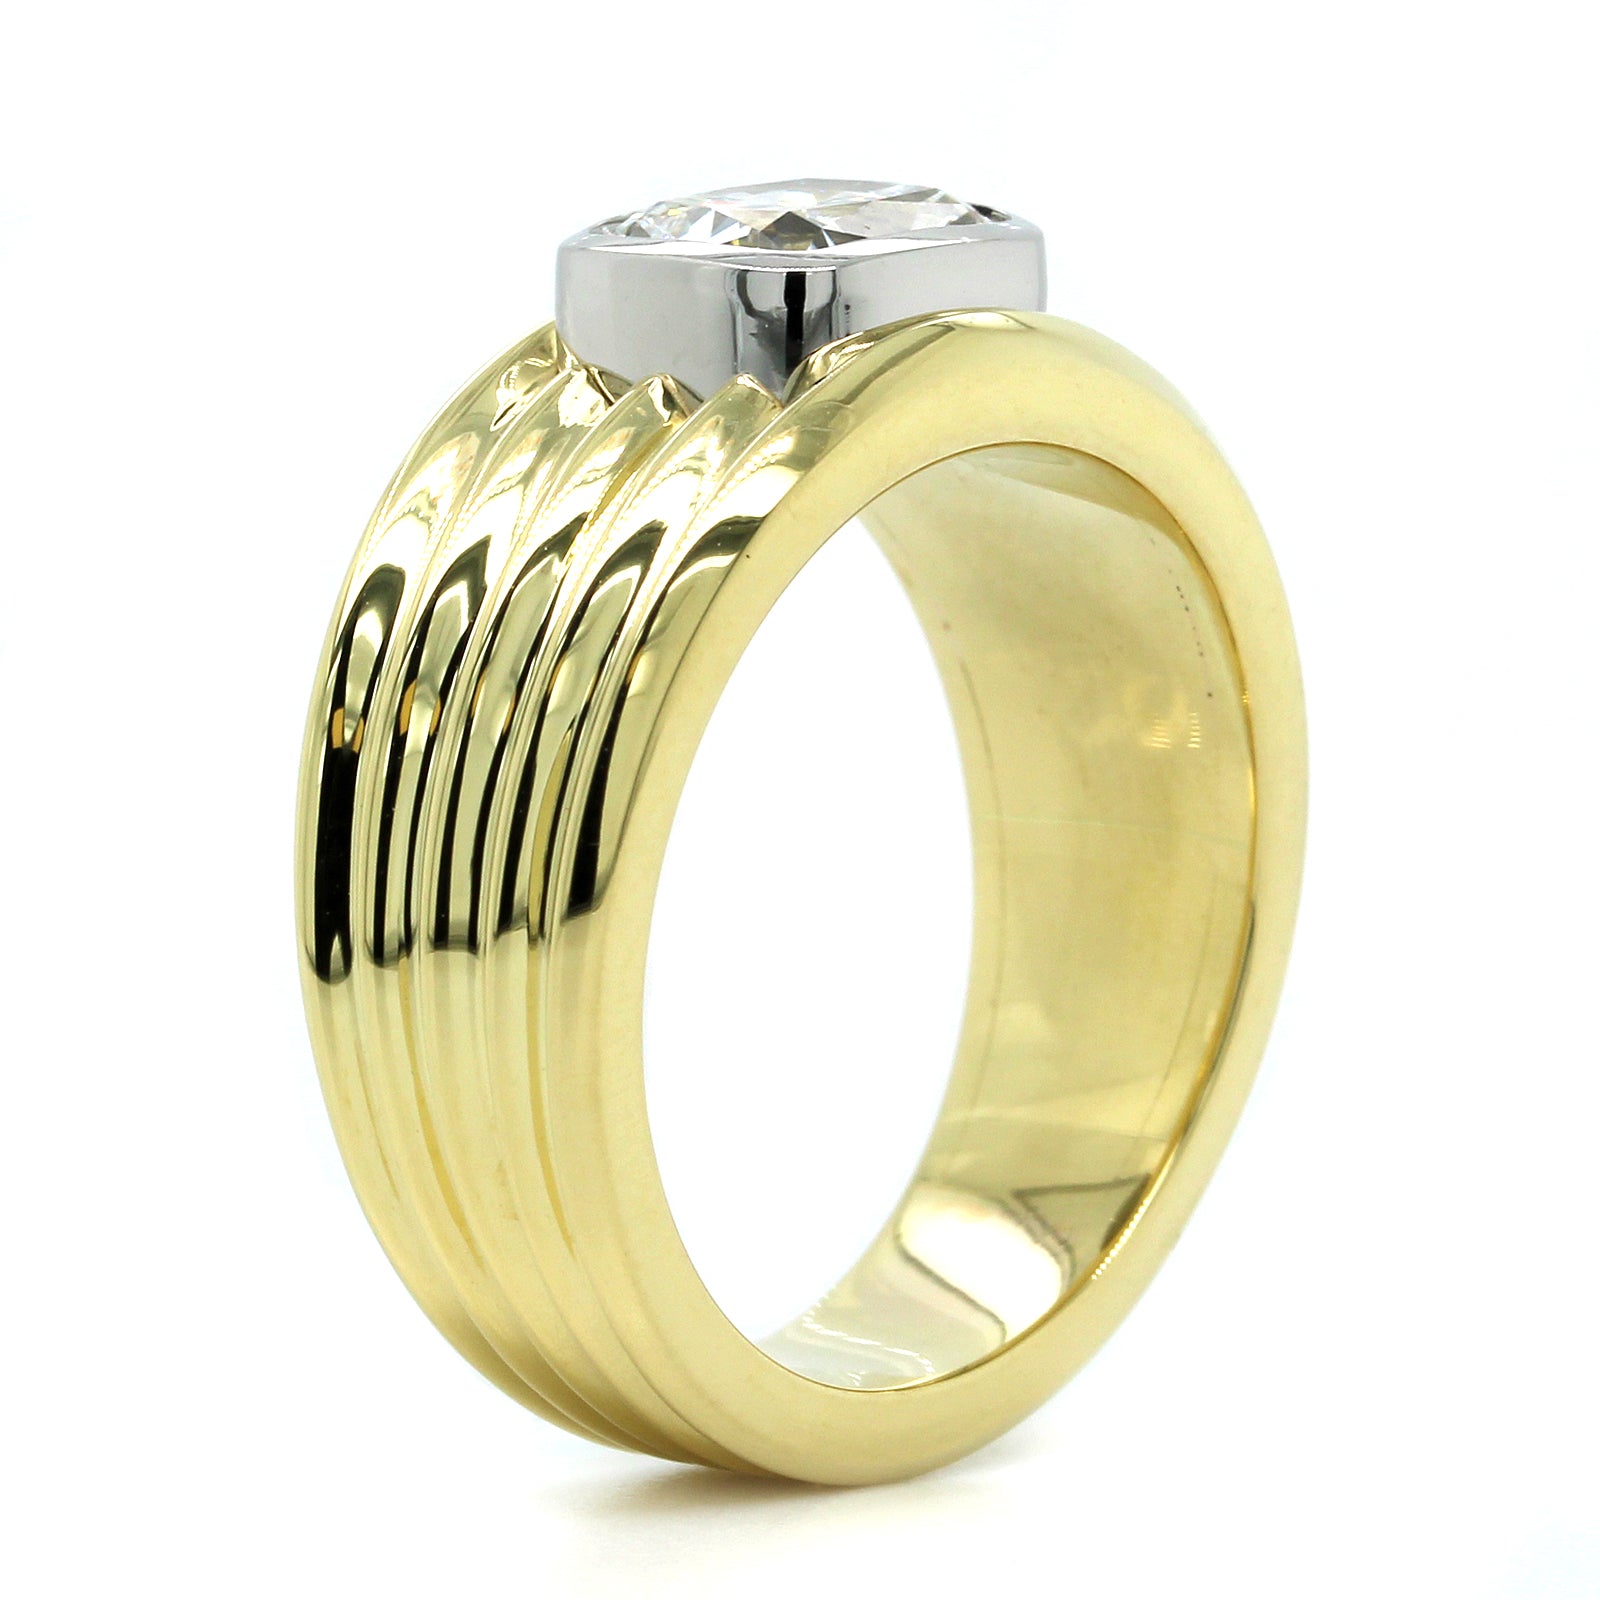 18K Yellow Gold Bezel Set Cushion Diamond Engagement Ring